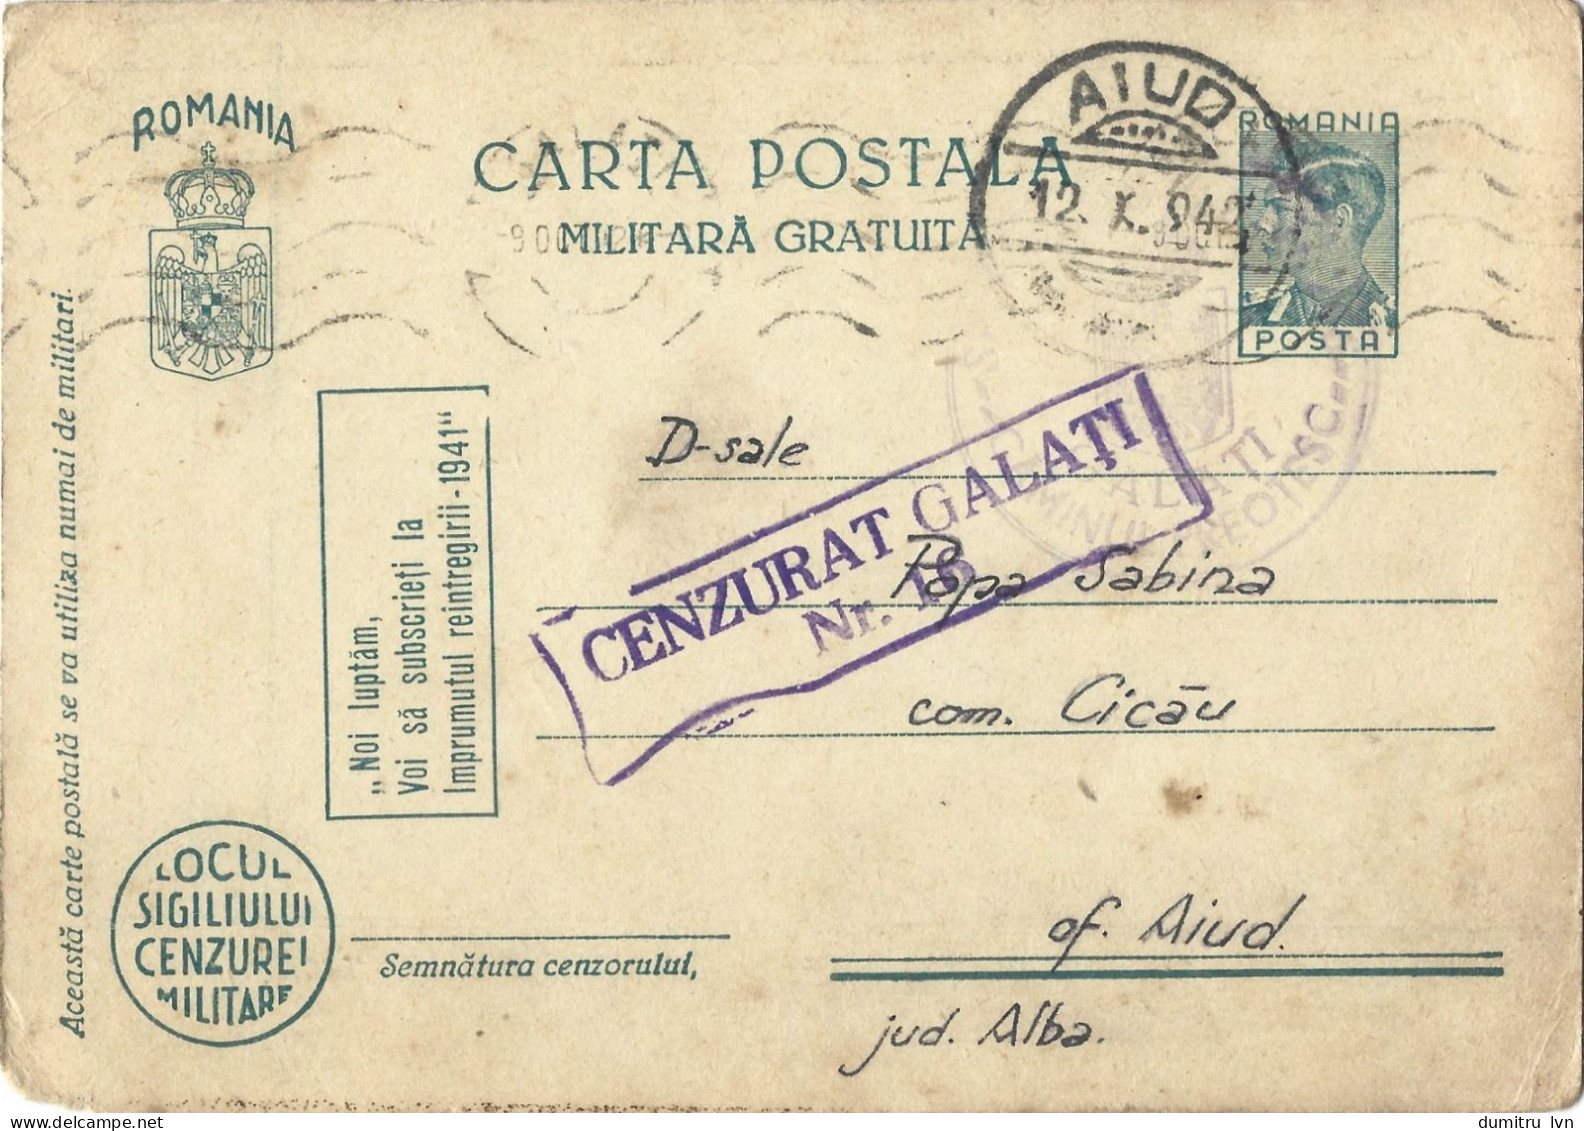 ROMANIA 1942 FREE MILITARY POSTCARD, CENSORED GALATI NR.16, GALATI CĂMINUL PREOȚESC STAMP, WOUNDED HOSPITAL Z. I. No 206 - World War 2 Letters